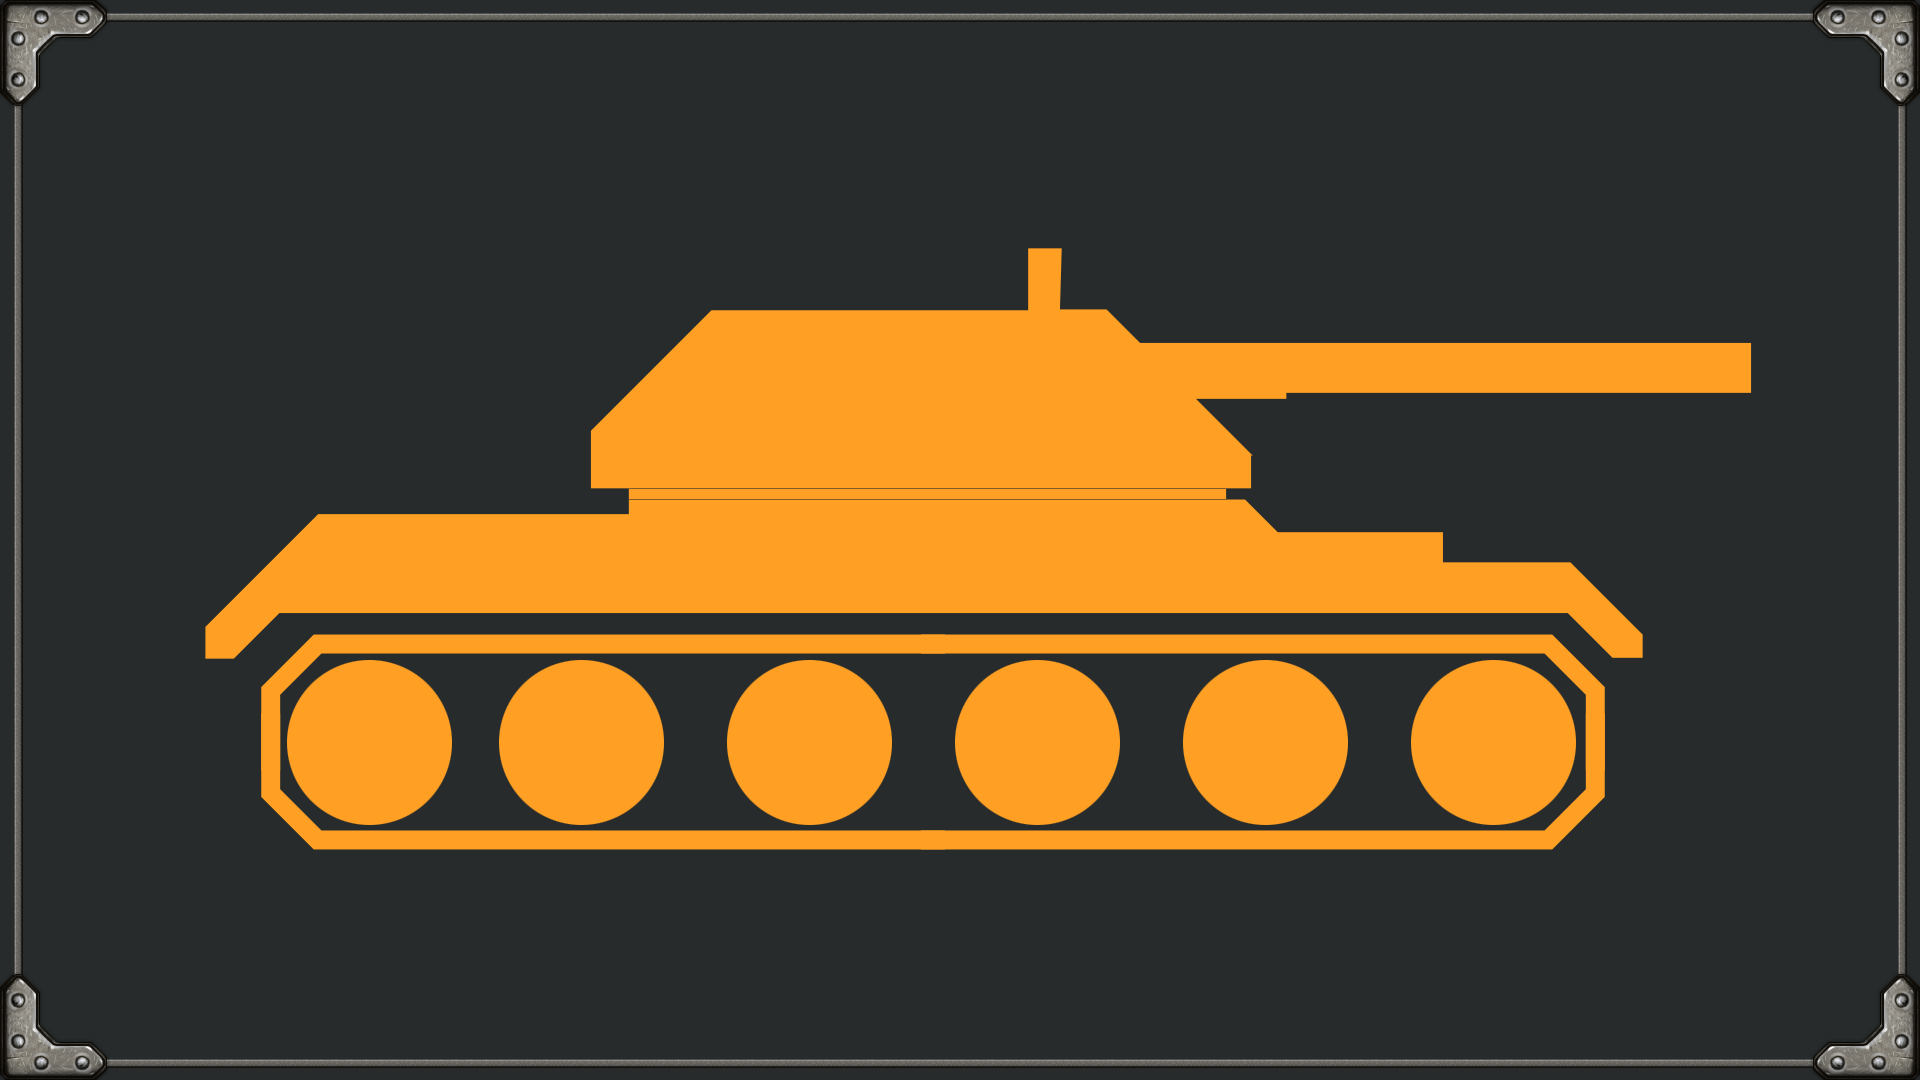 Icon for Tank slayer